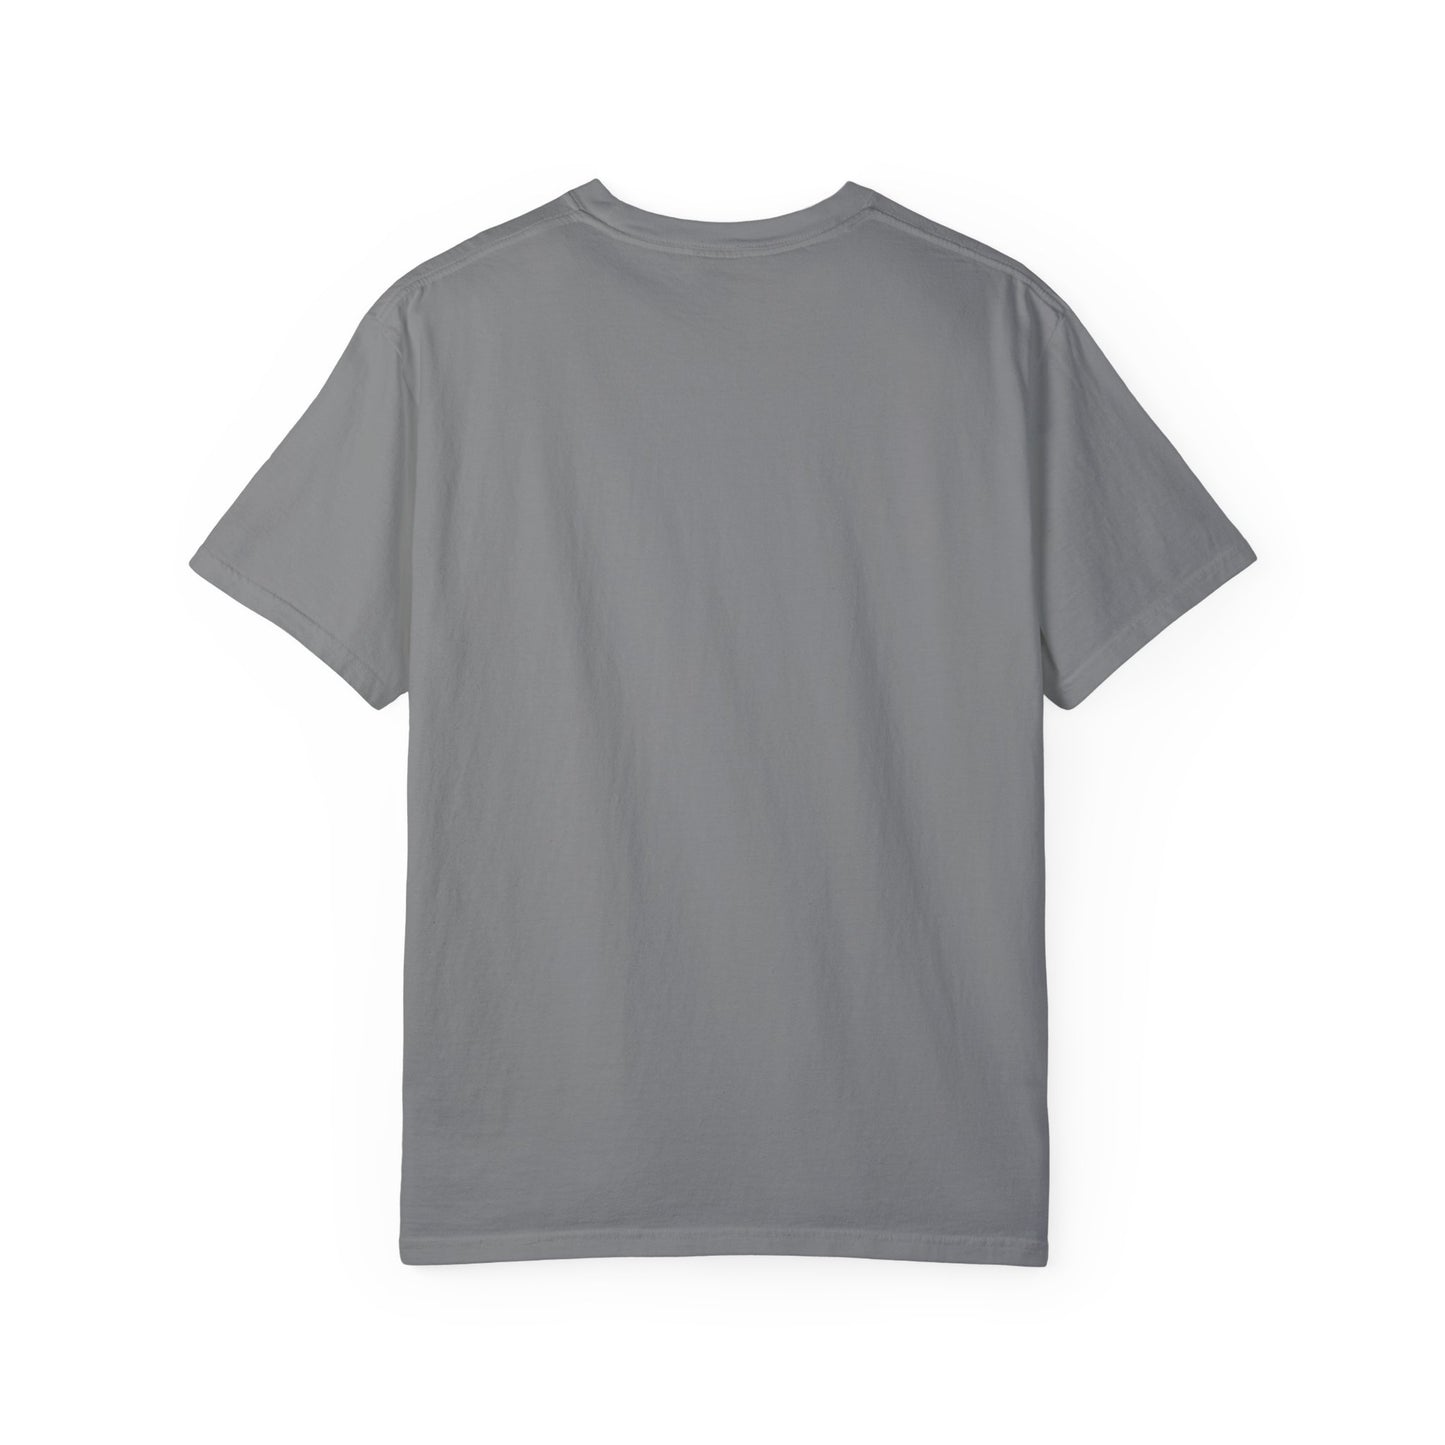 Hip Hop Teddy Bear Graphic Unisex Garment-dyed T-shirt Cotton Funny Humorous Graphic Soft Premium Unisex Men Women Grey T-shirt Birthday Gift-40